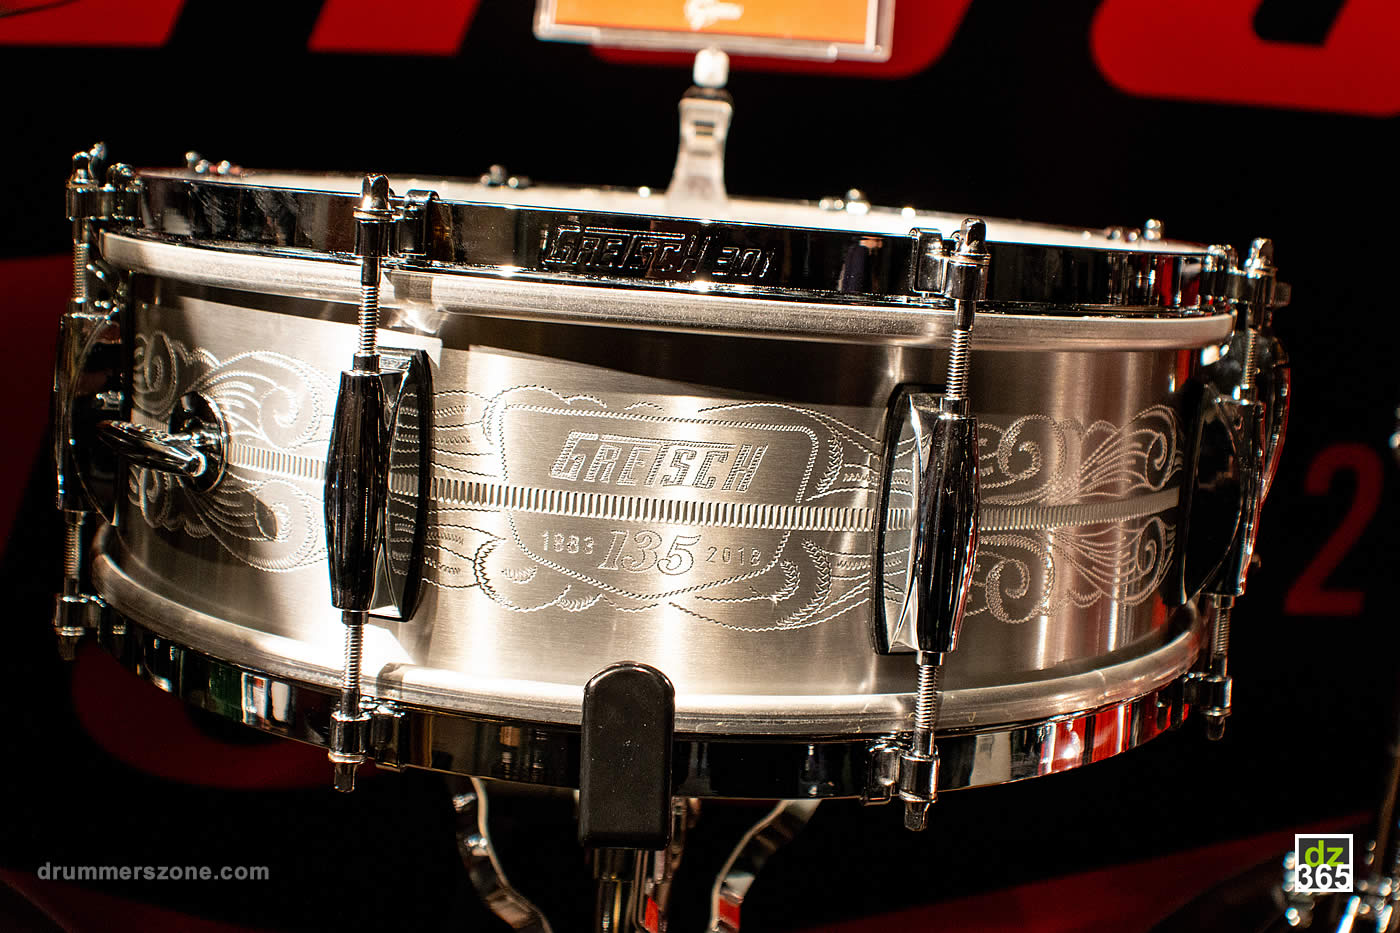 The Gretsch 135th anniversary commemorative snare drum